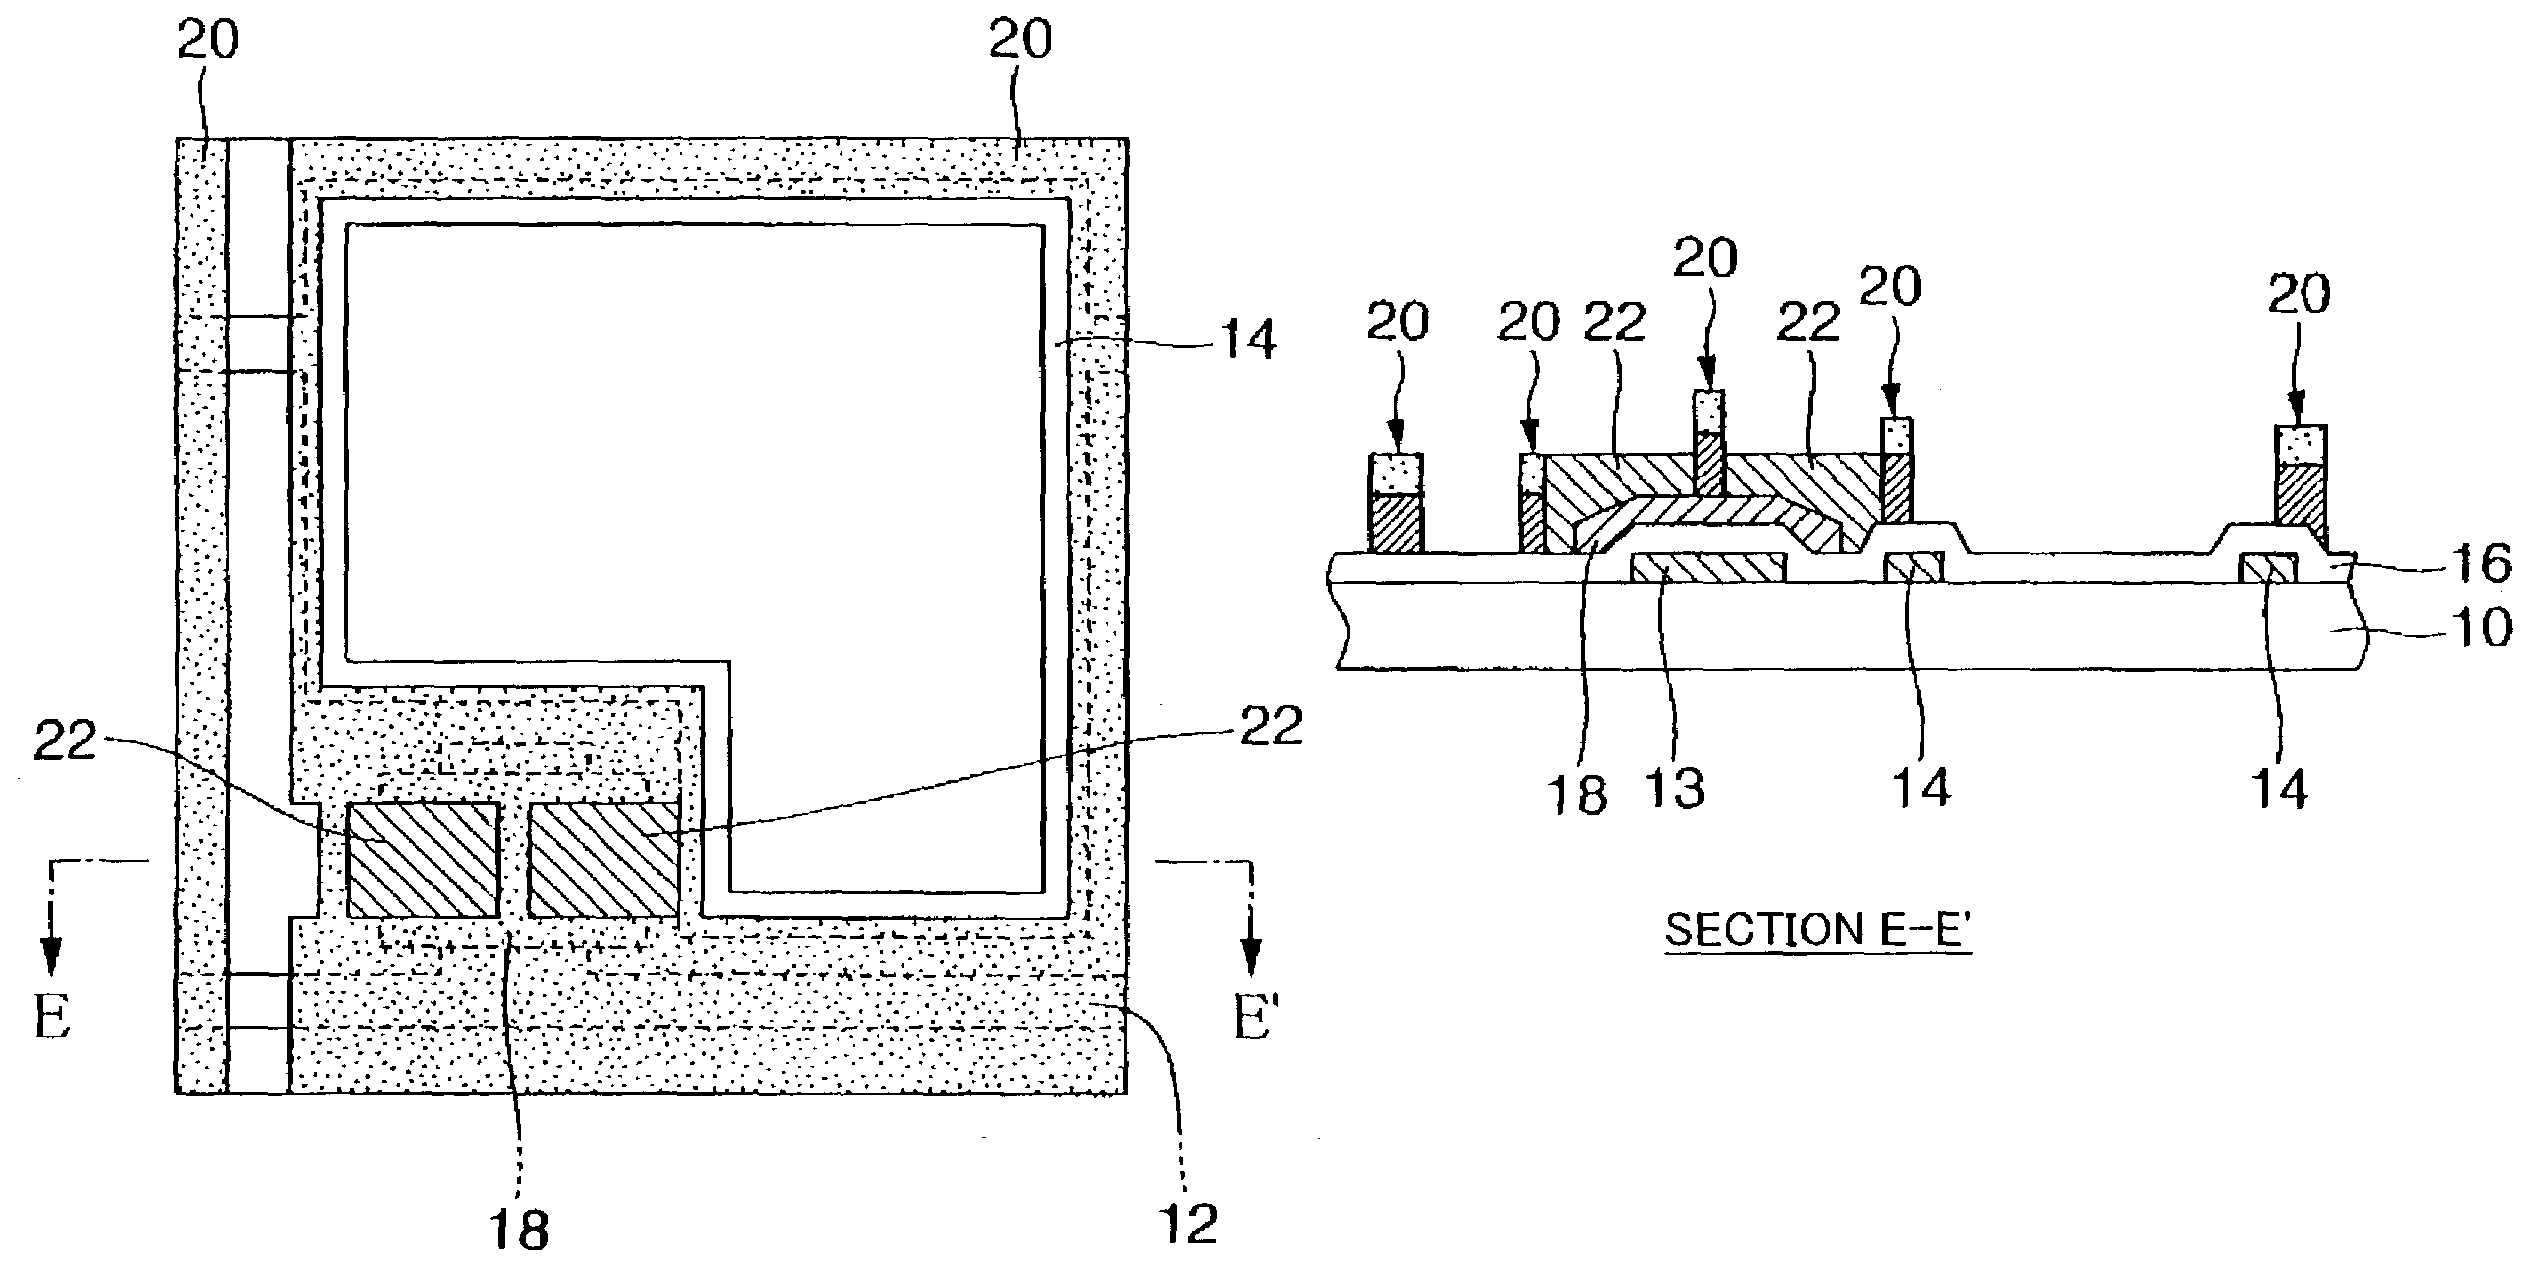 Liquid crystal display device having partition walls